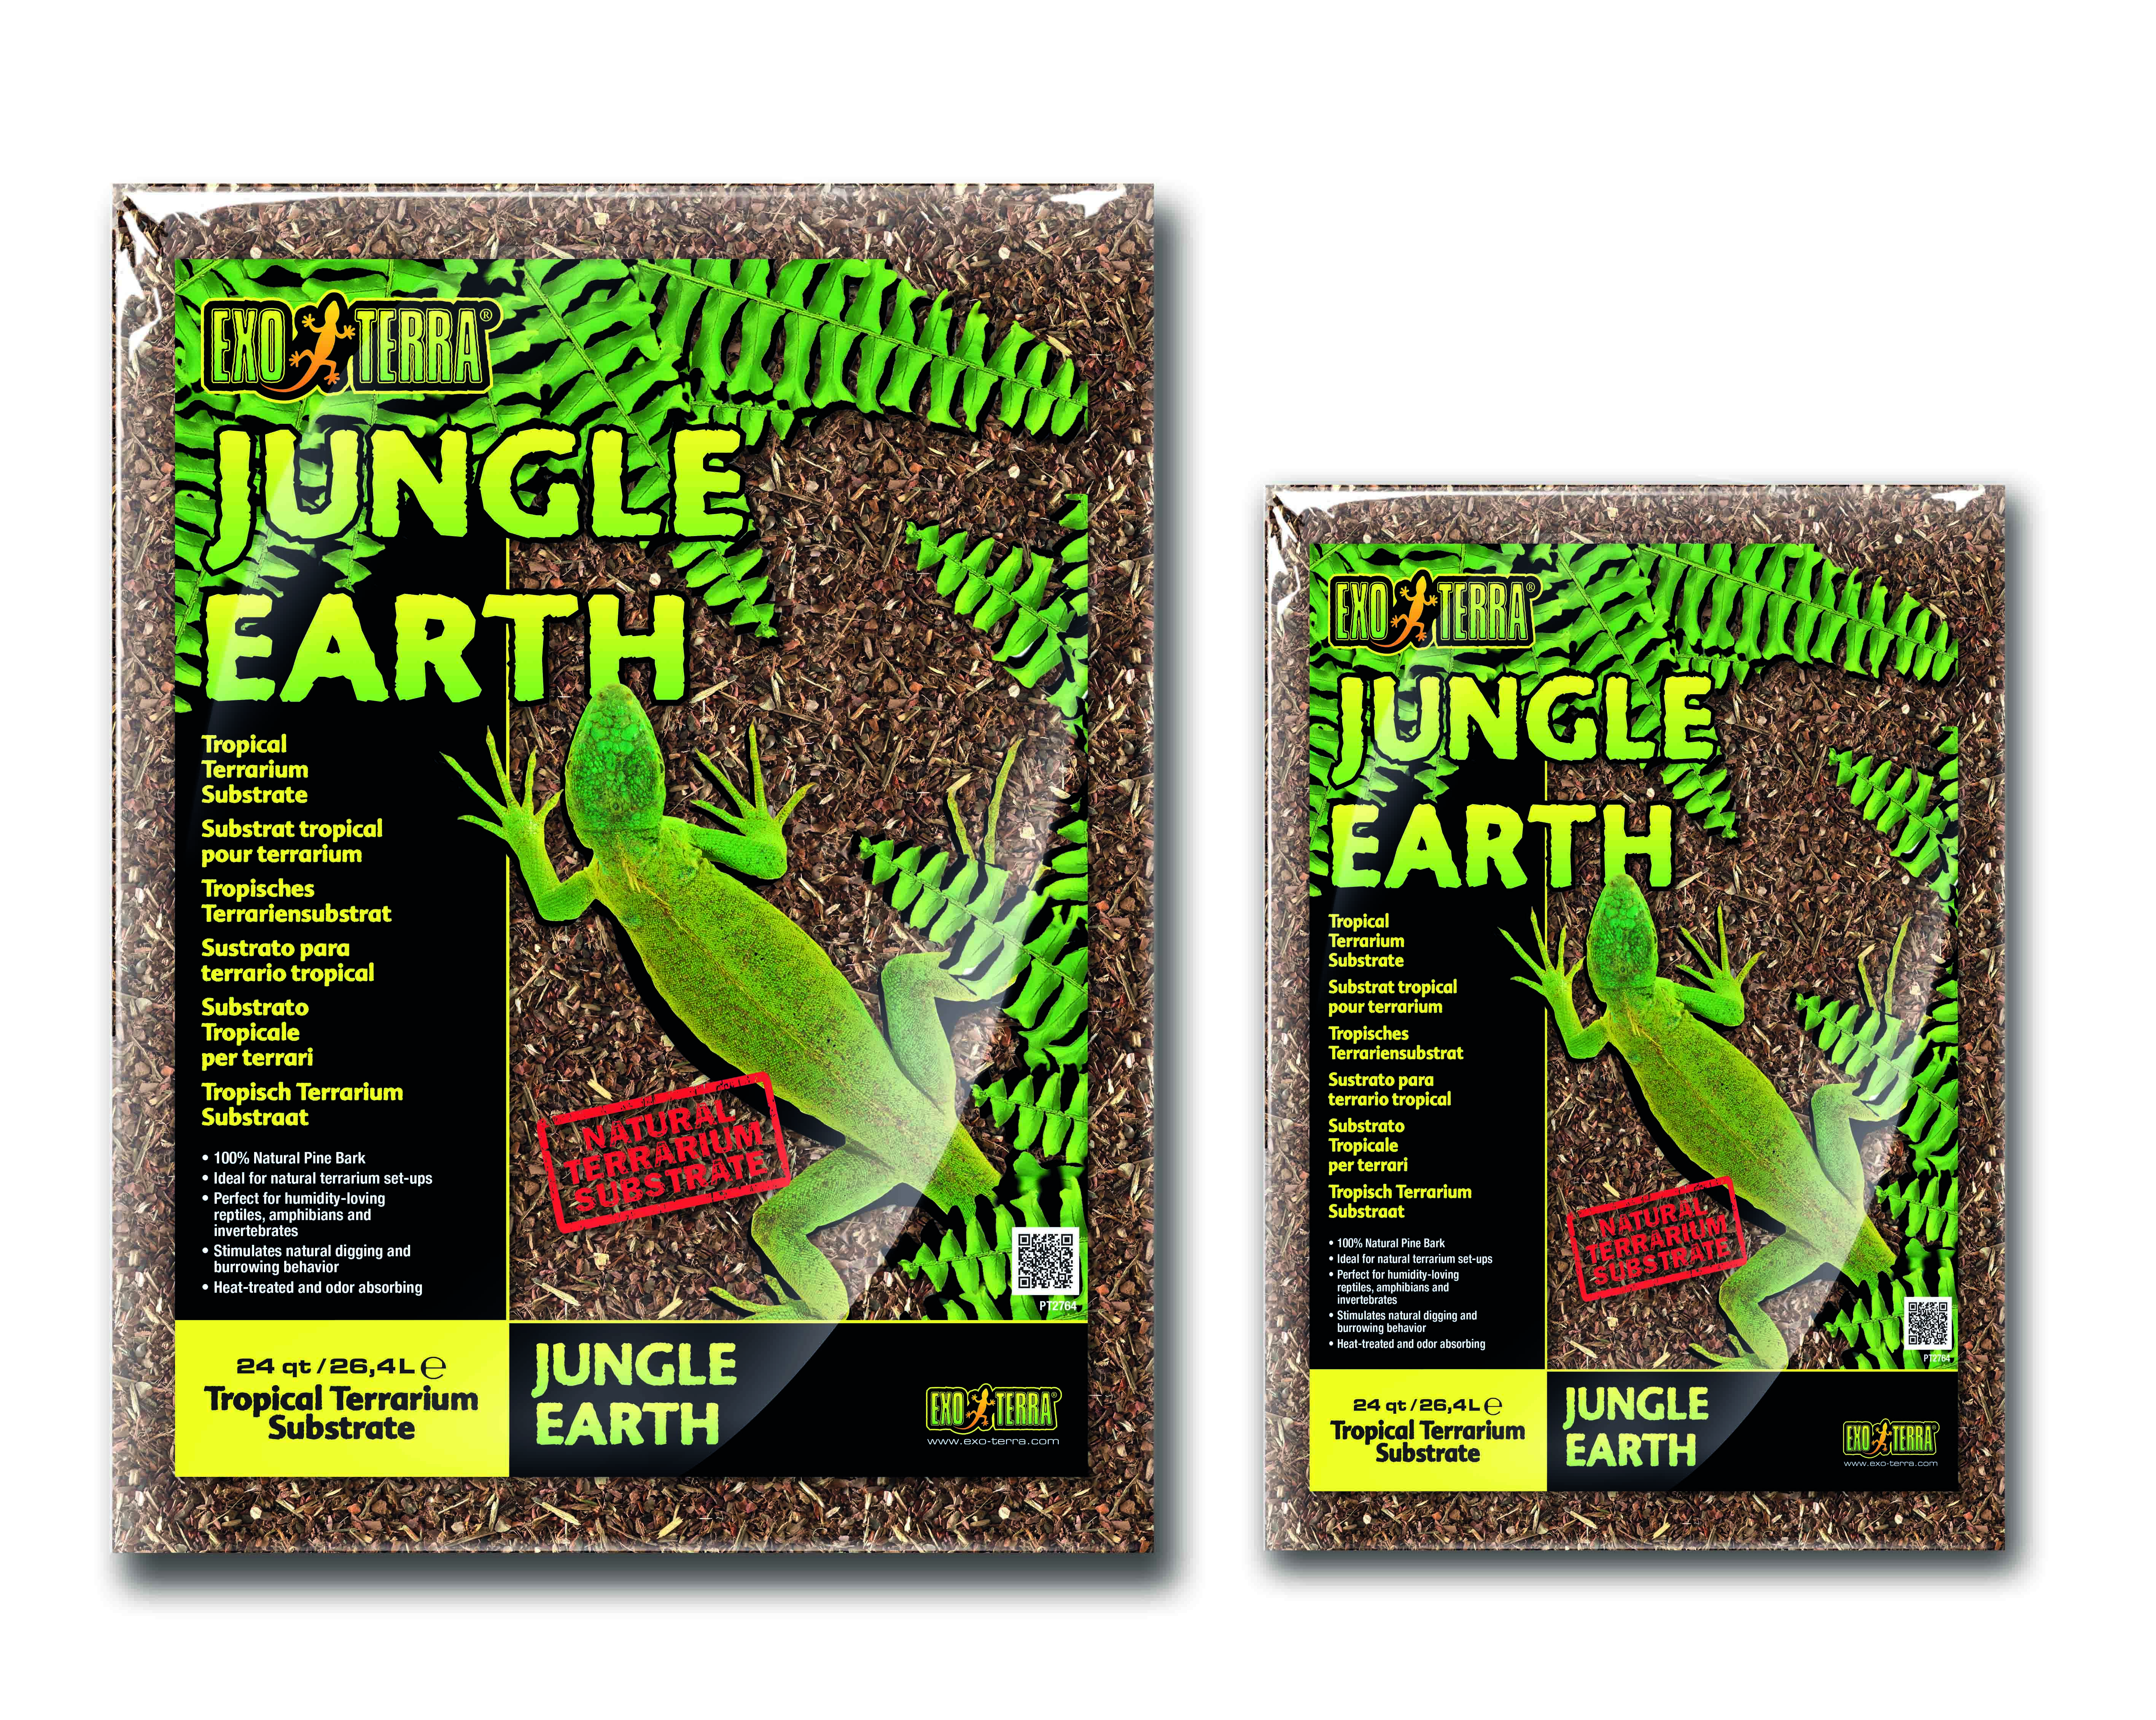 Ex jungle earth natural terrarium substrate - <Product shot>